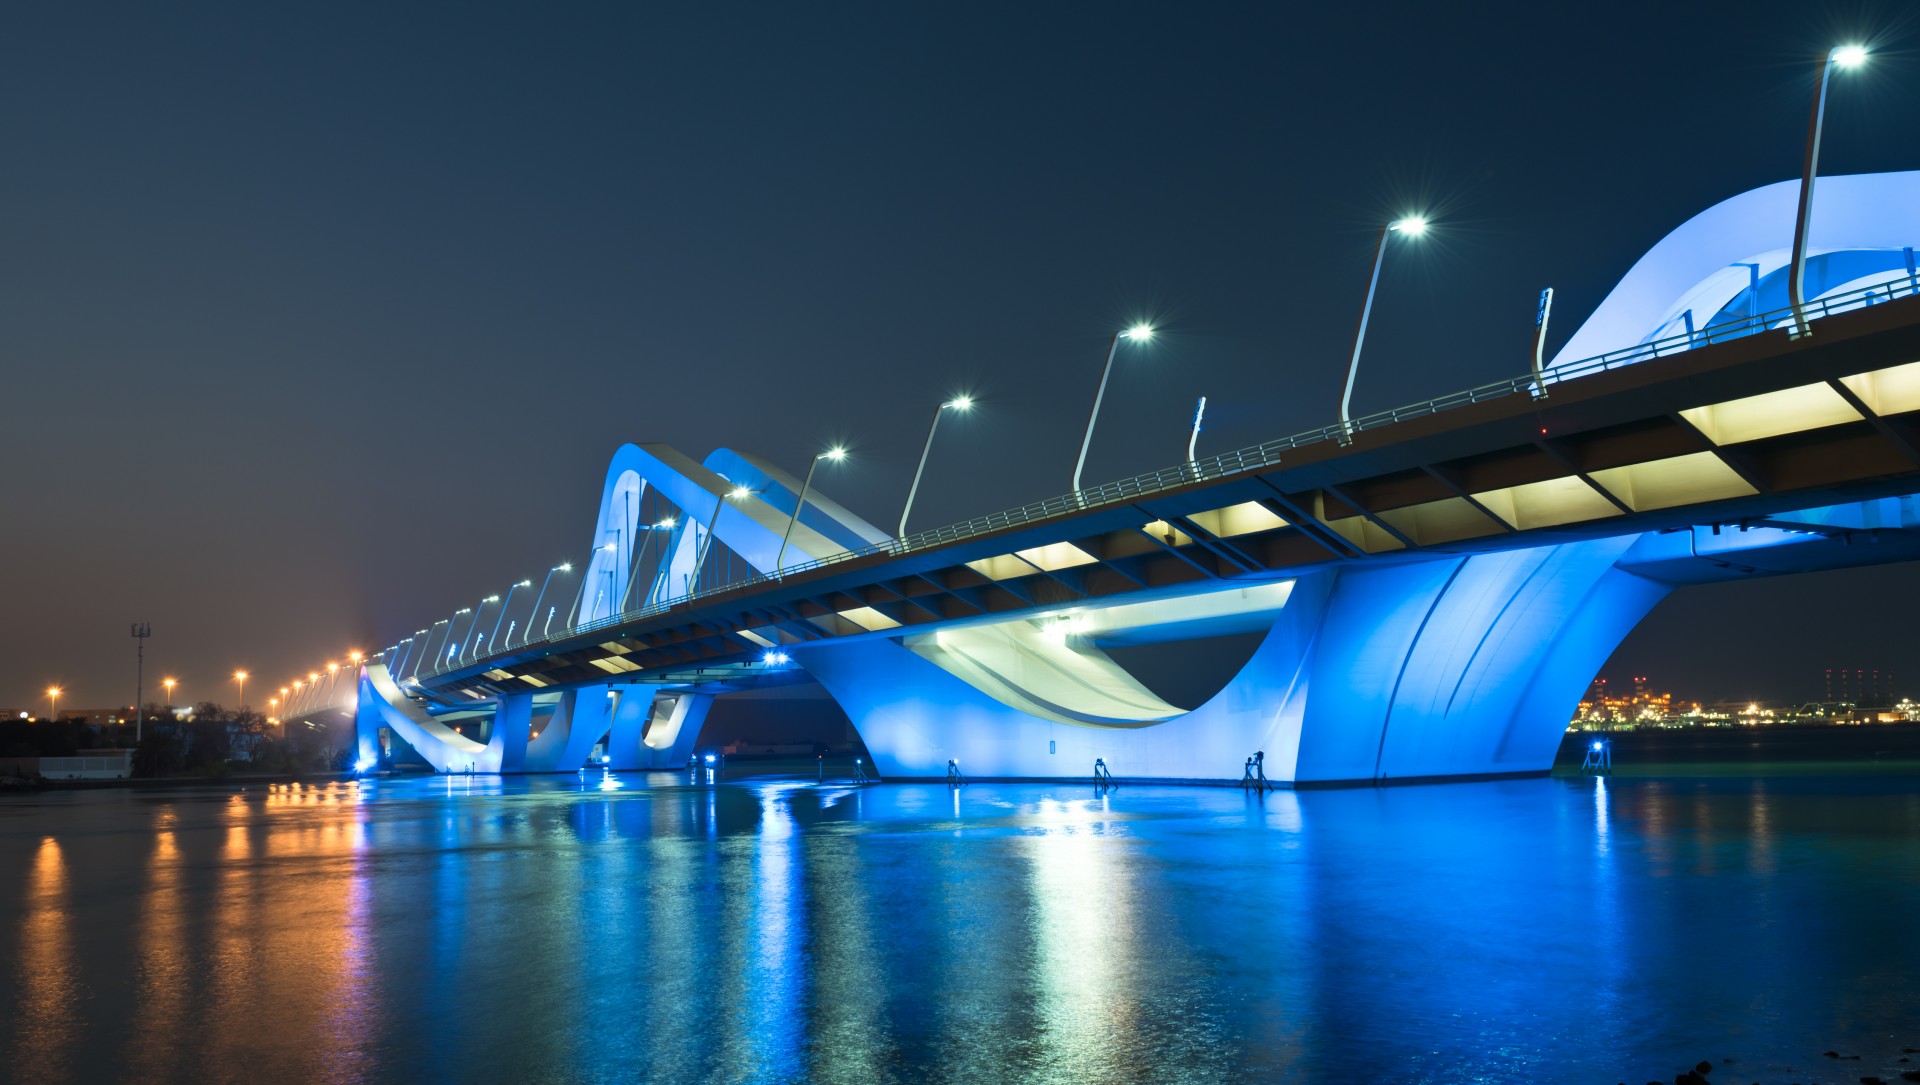 The Sheikh Zayed Bridge in Abu Dhabi